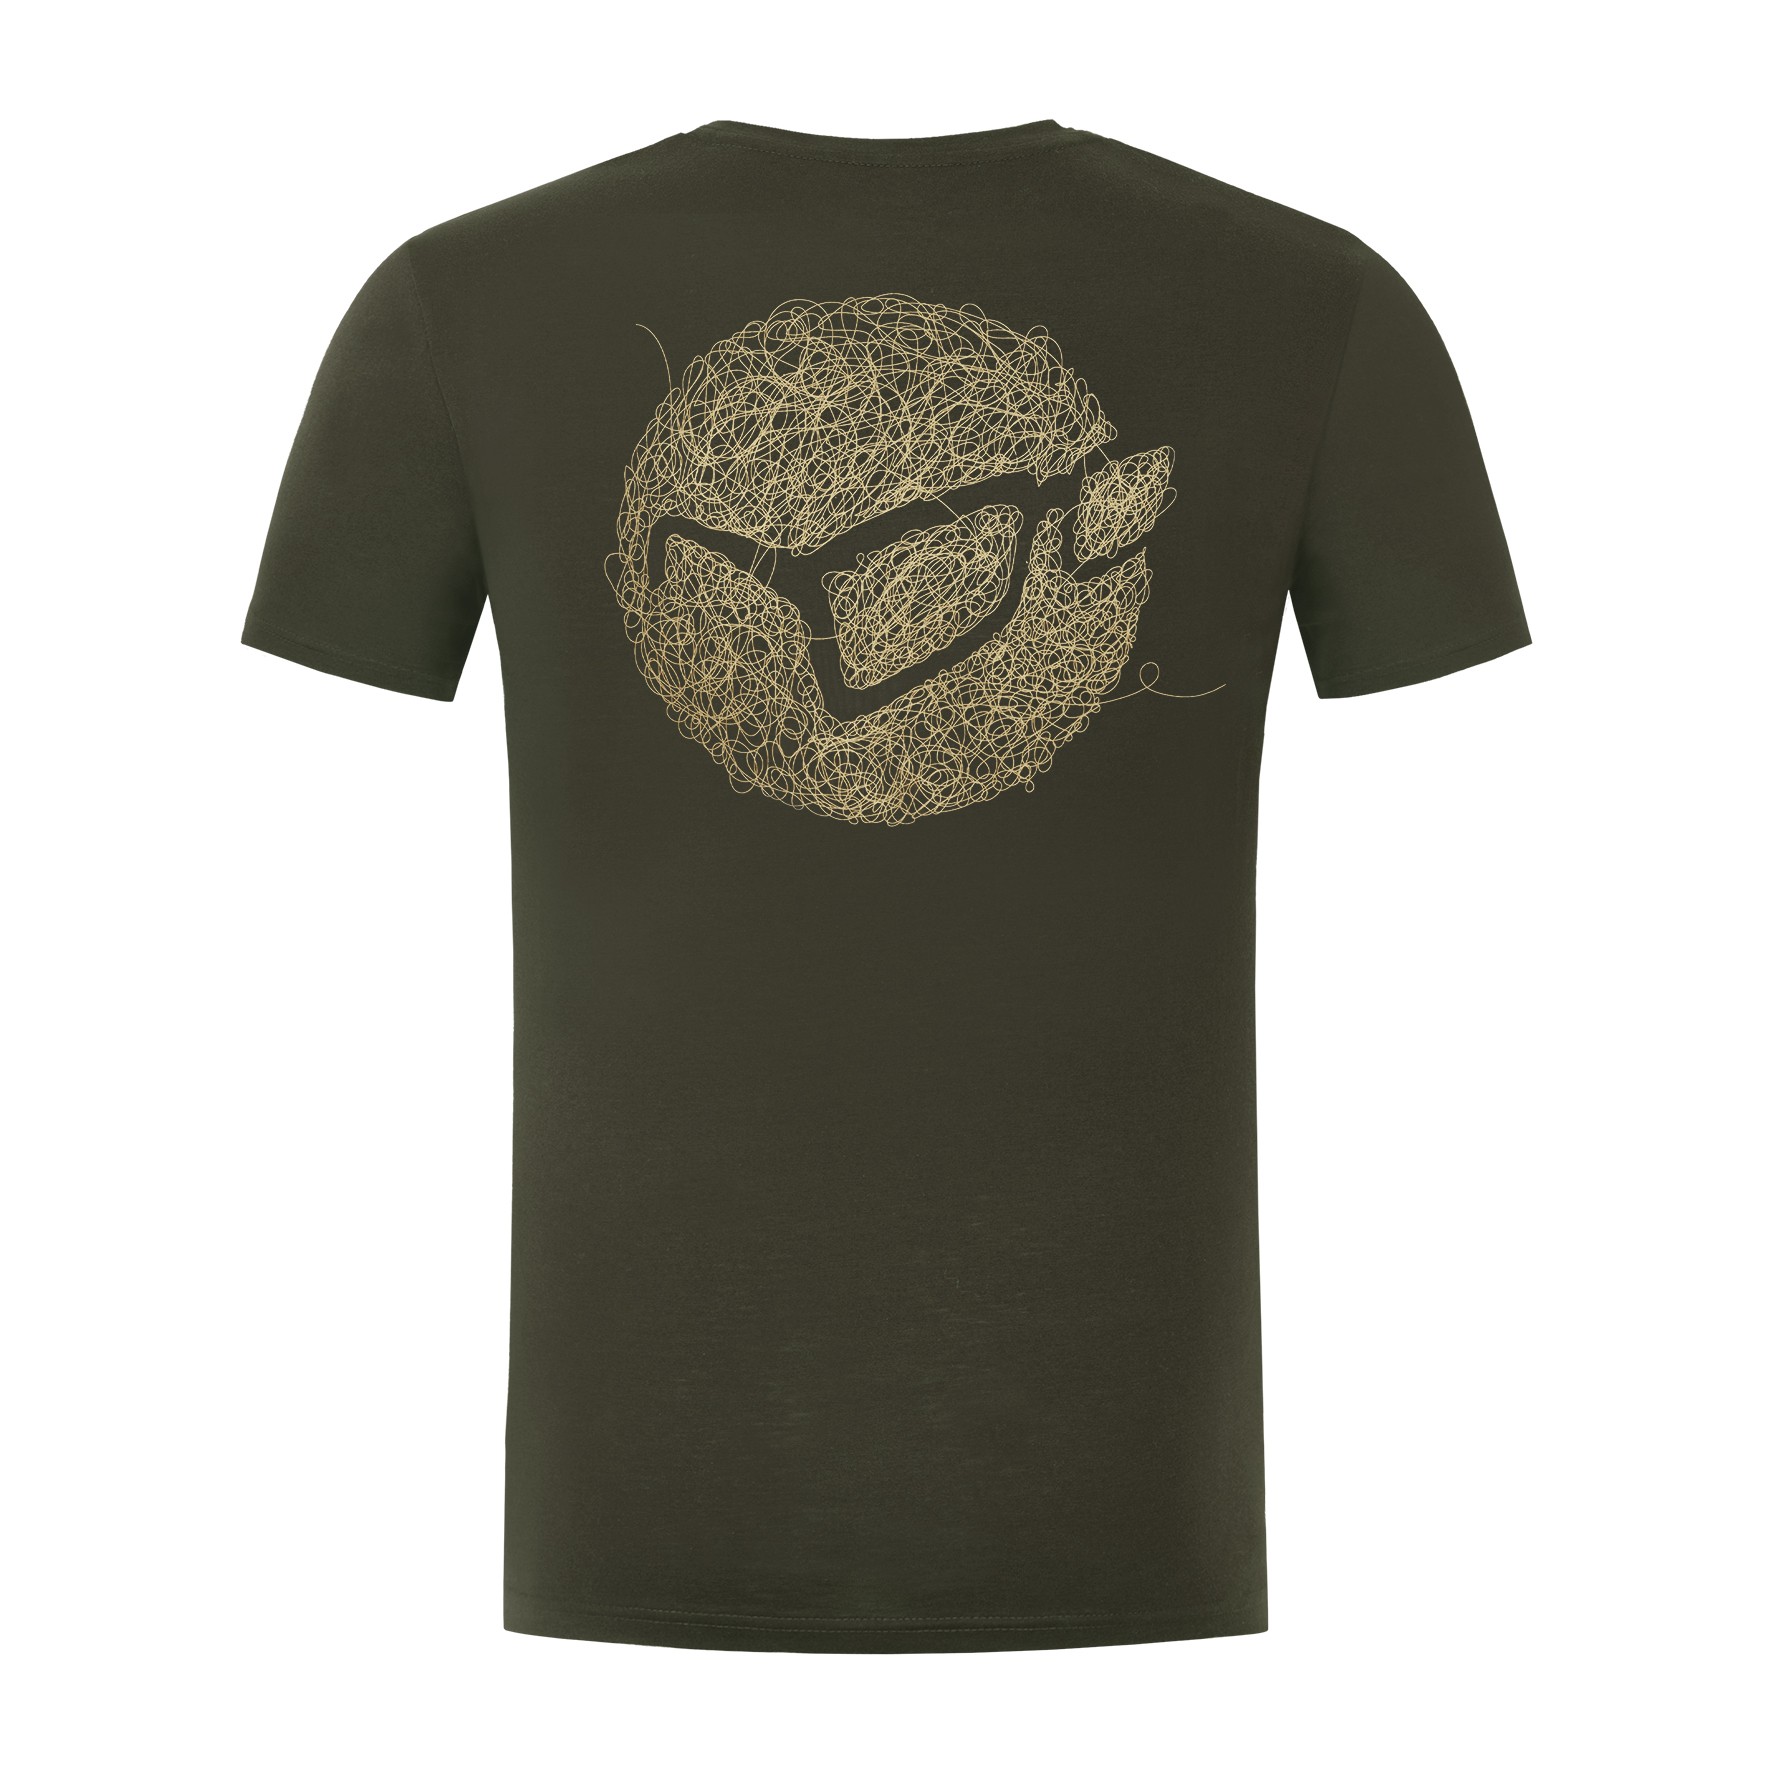 Korda Birdsnest Tee Dark Olive T-Shirt